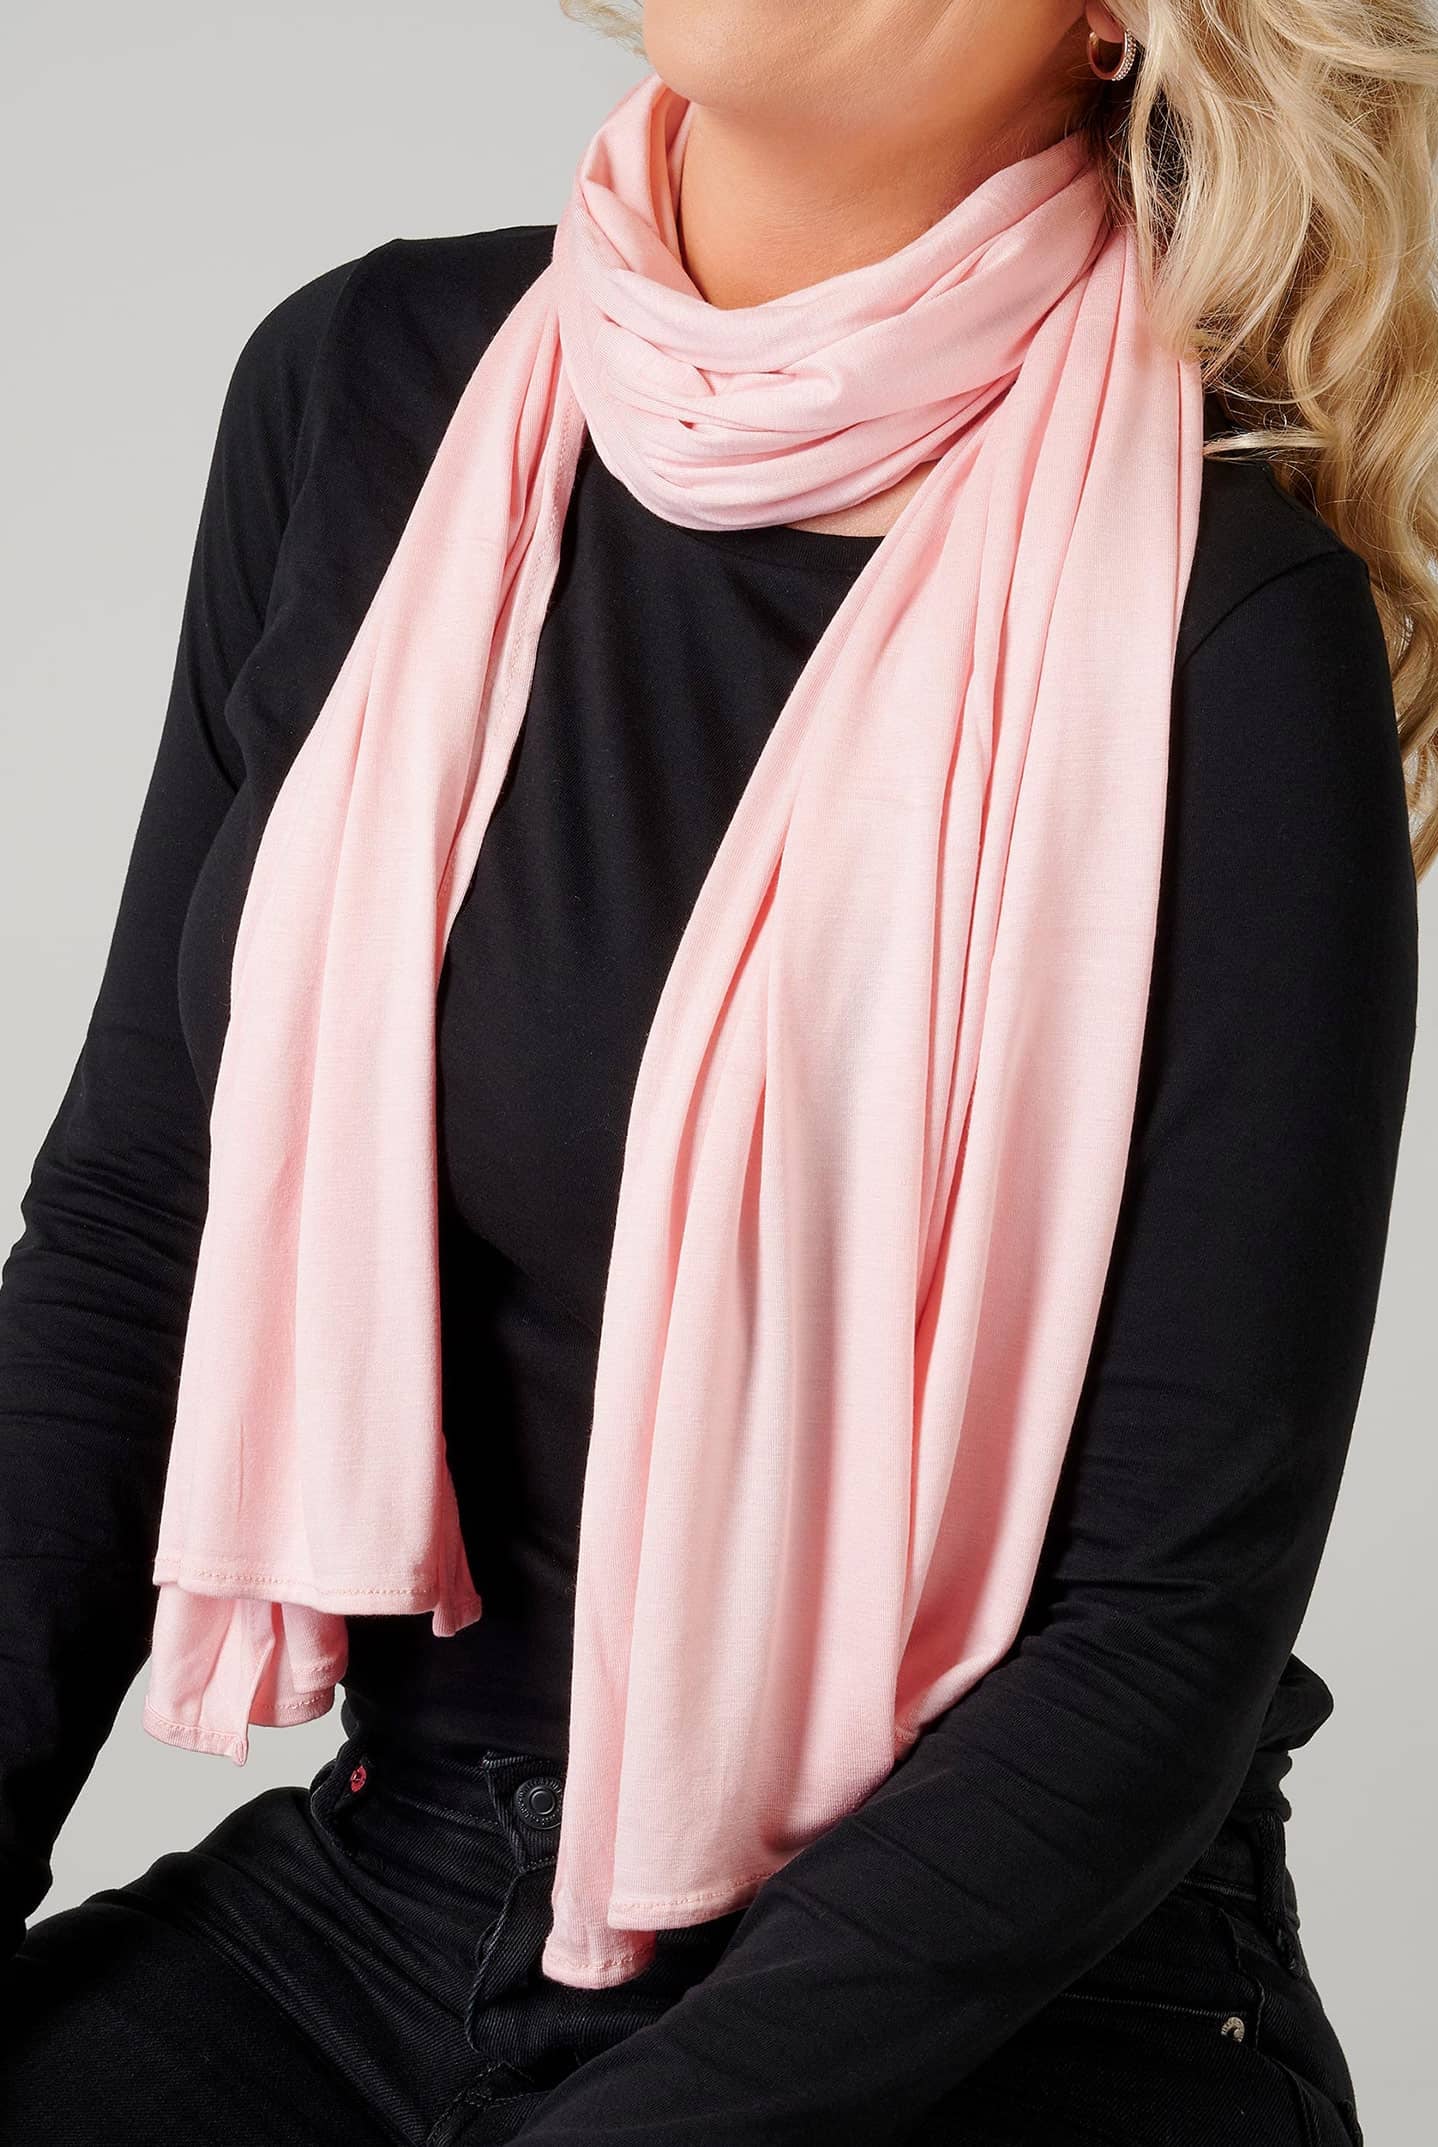 buy pink scarf online